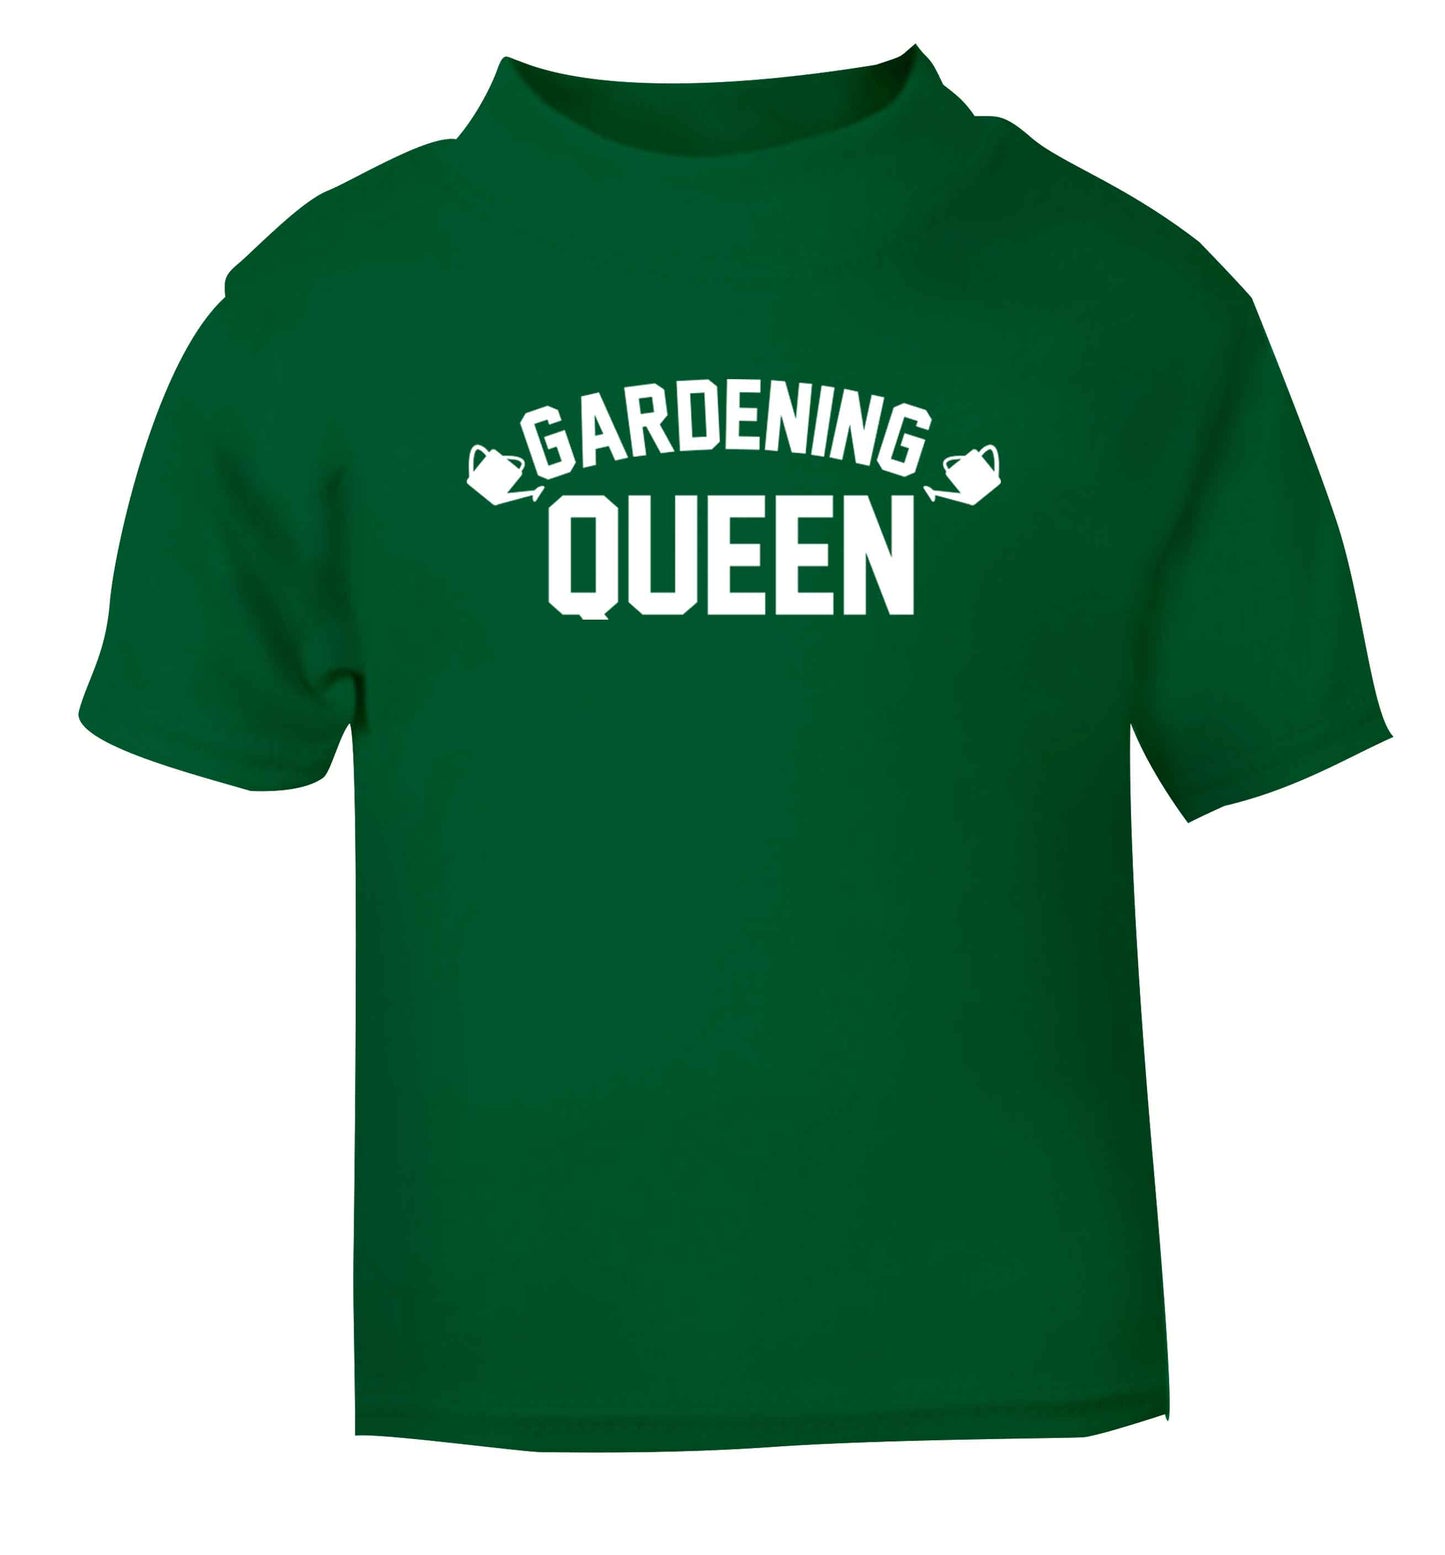 Gardening queen green Baby Toddler Tshirt 2 Years